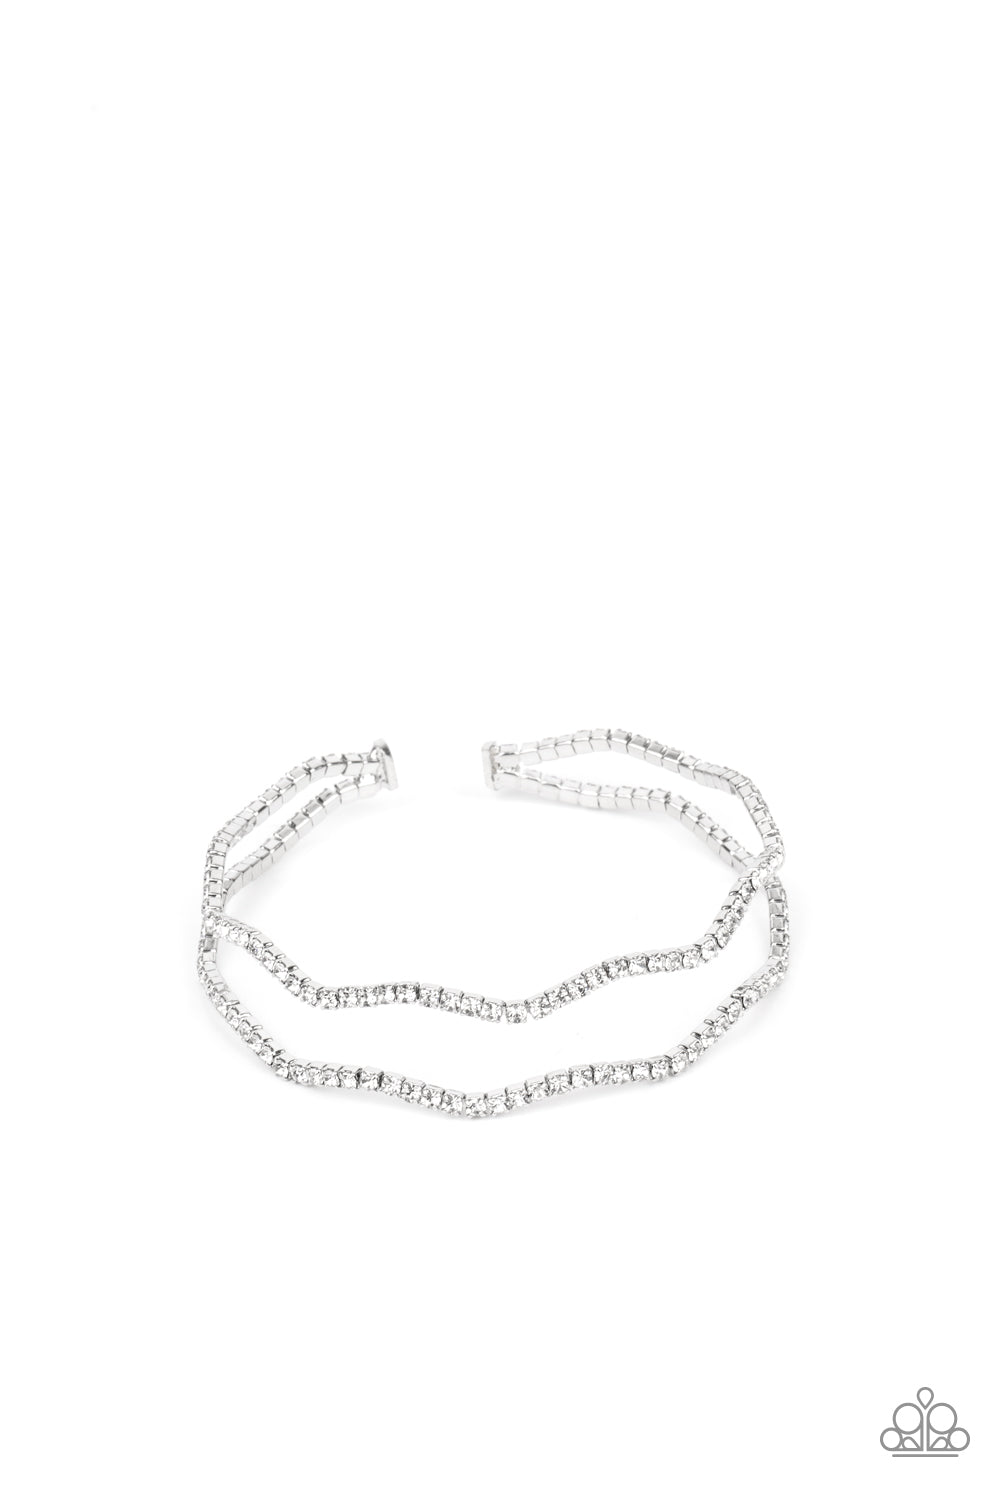 Paparazzi Delicate Dazzle - White Bracelet - A Finishing Touch Jewelry